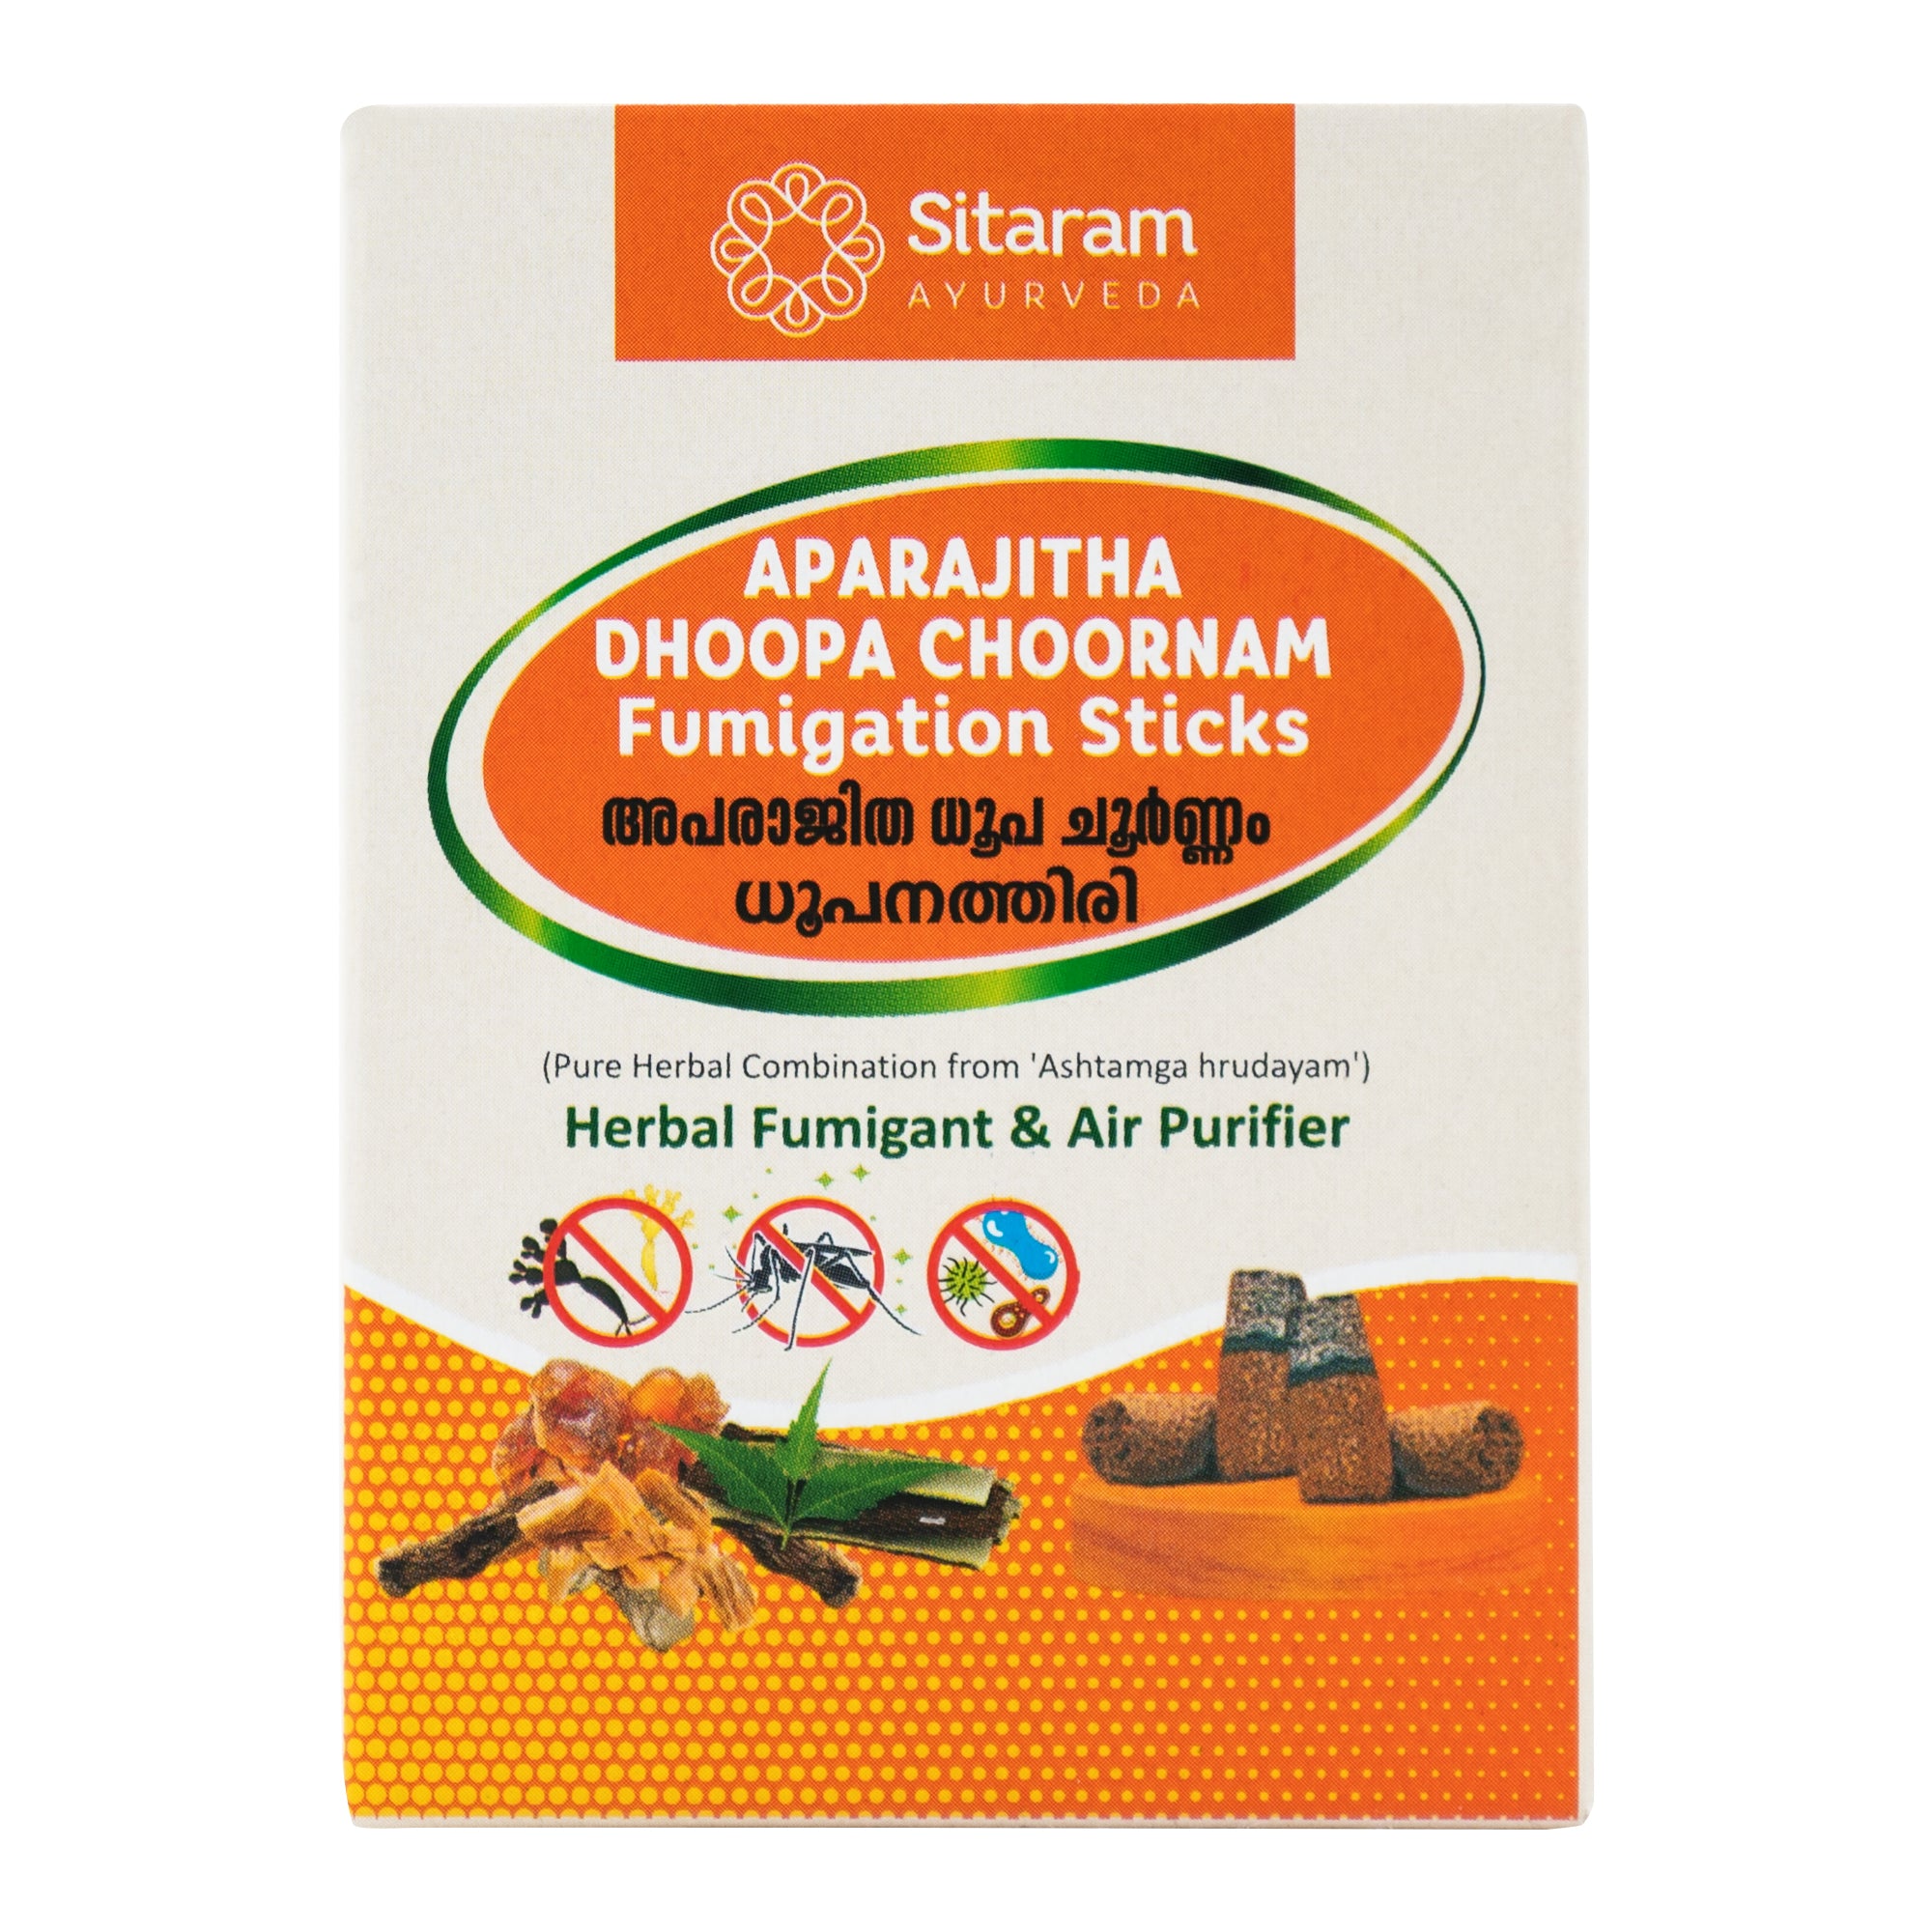 Sitaram Ayurveda Aparajitha Dhoopa Choornam Fumigation Sticks 20NOS - Pack of 4